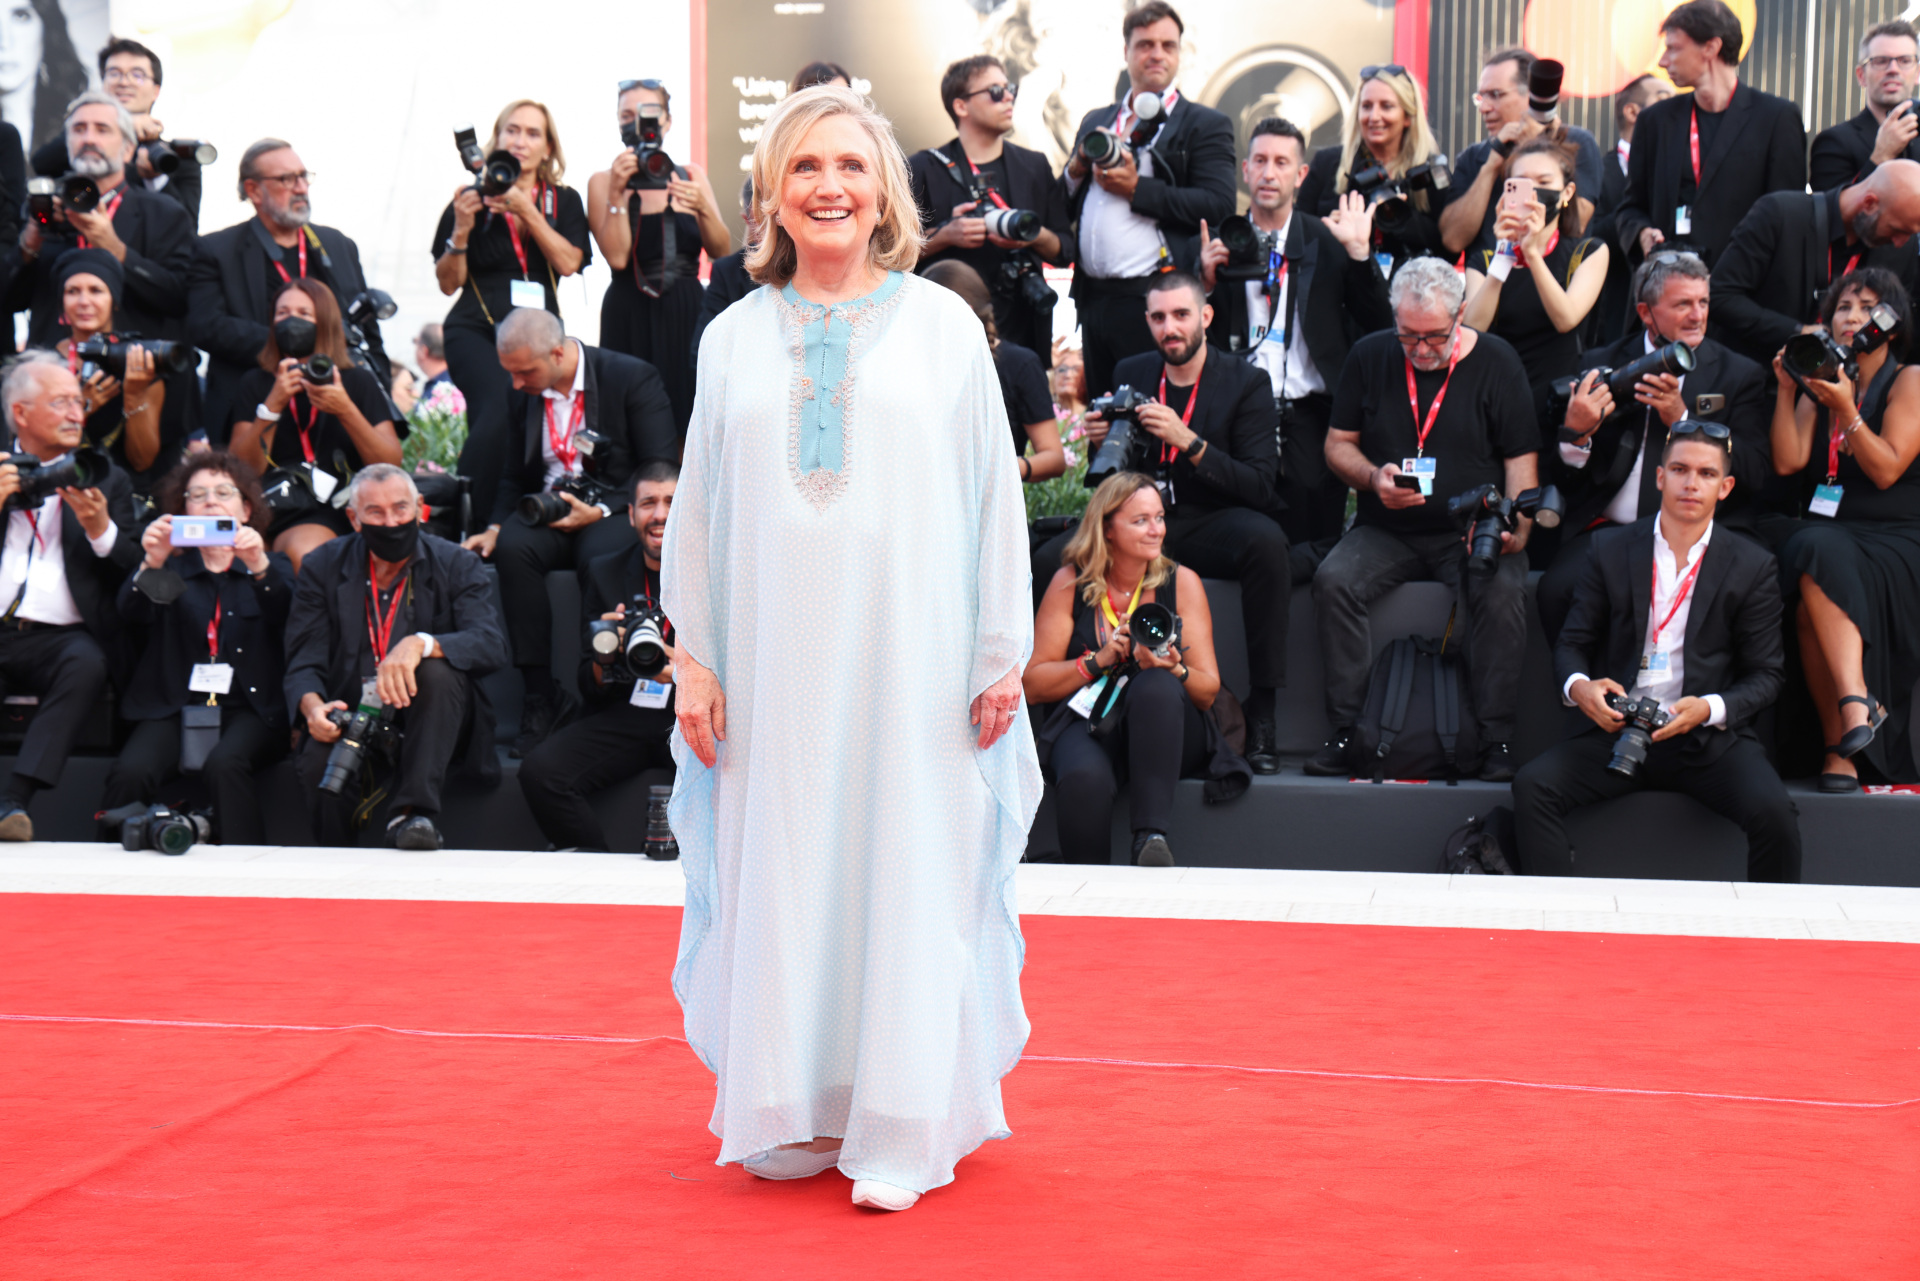 Hillary Clinton,hillary clinton venezia,hillary clinton red carpet